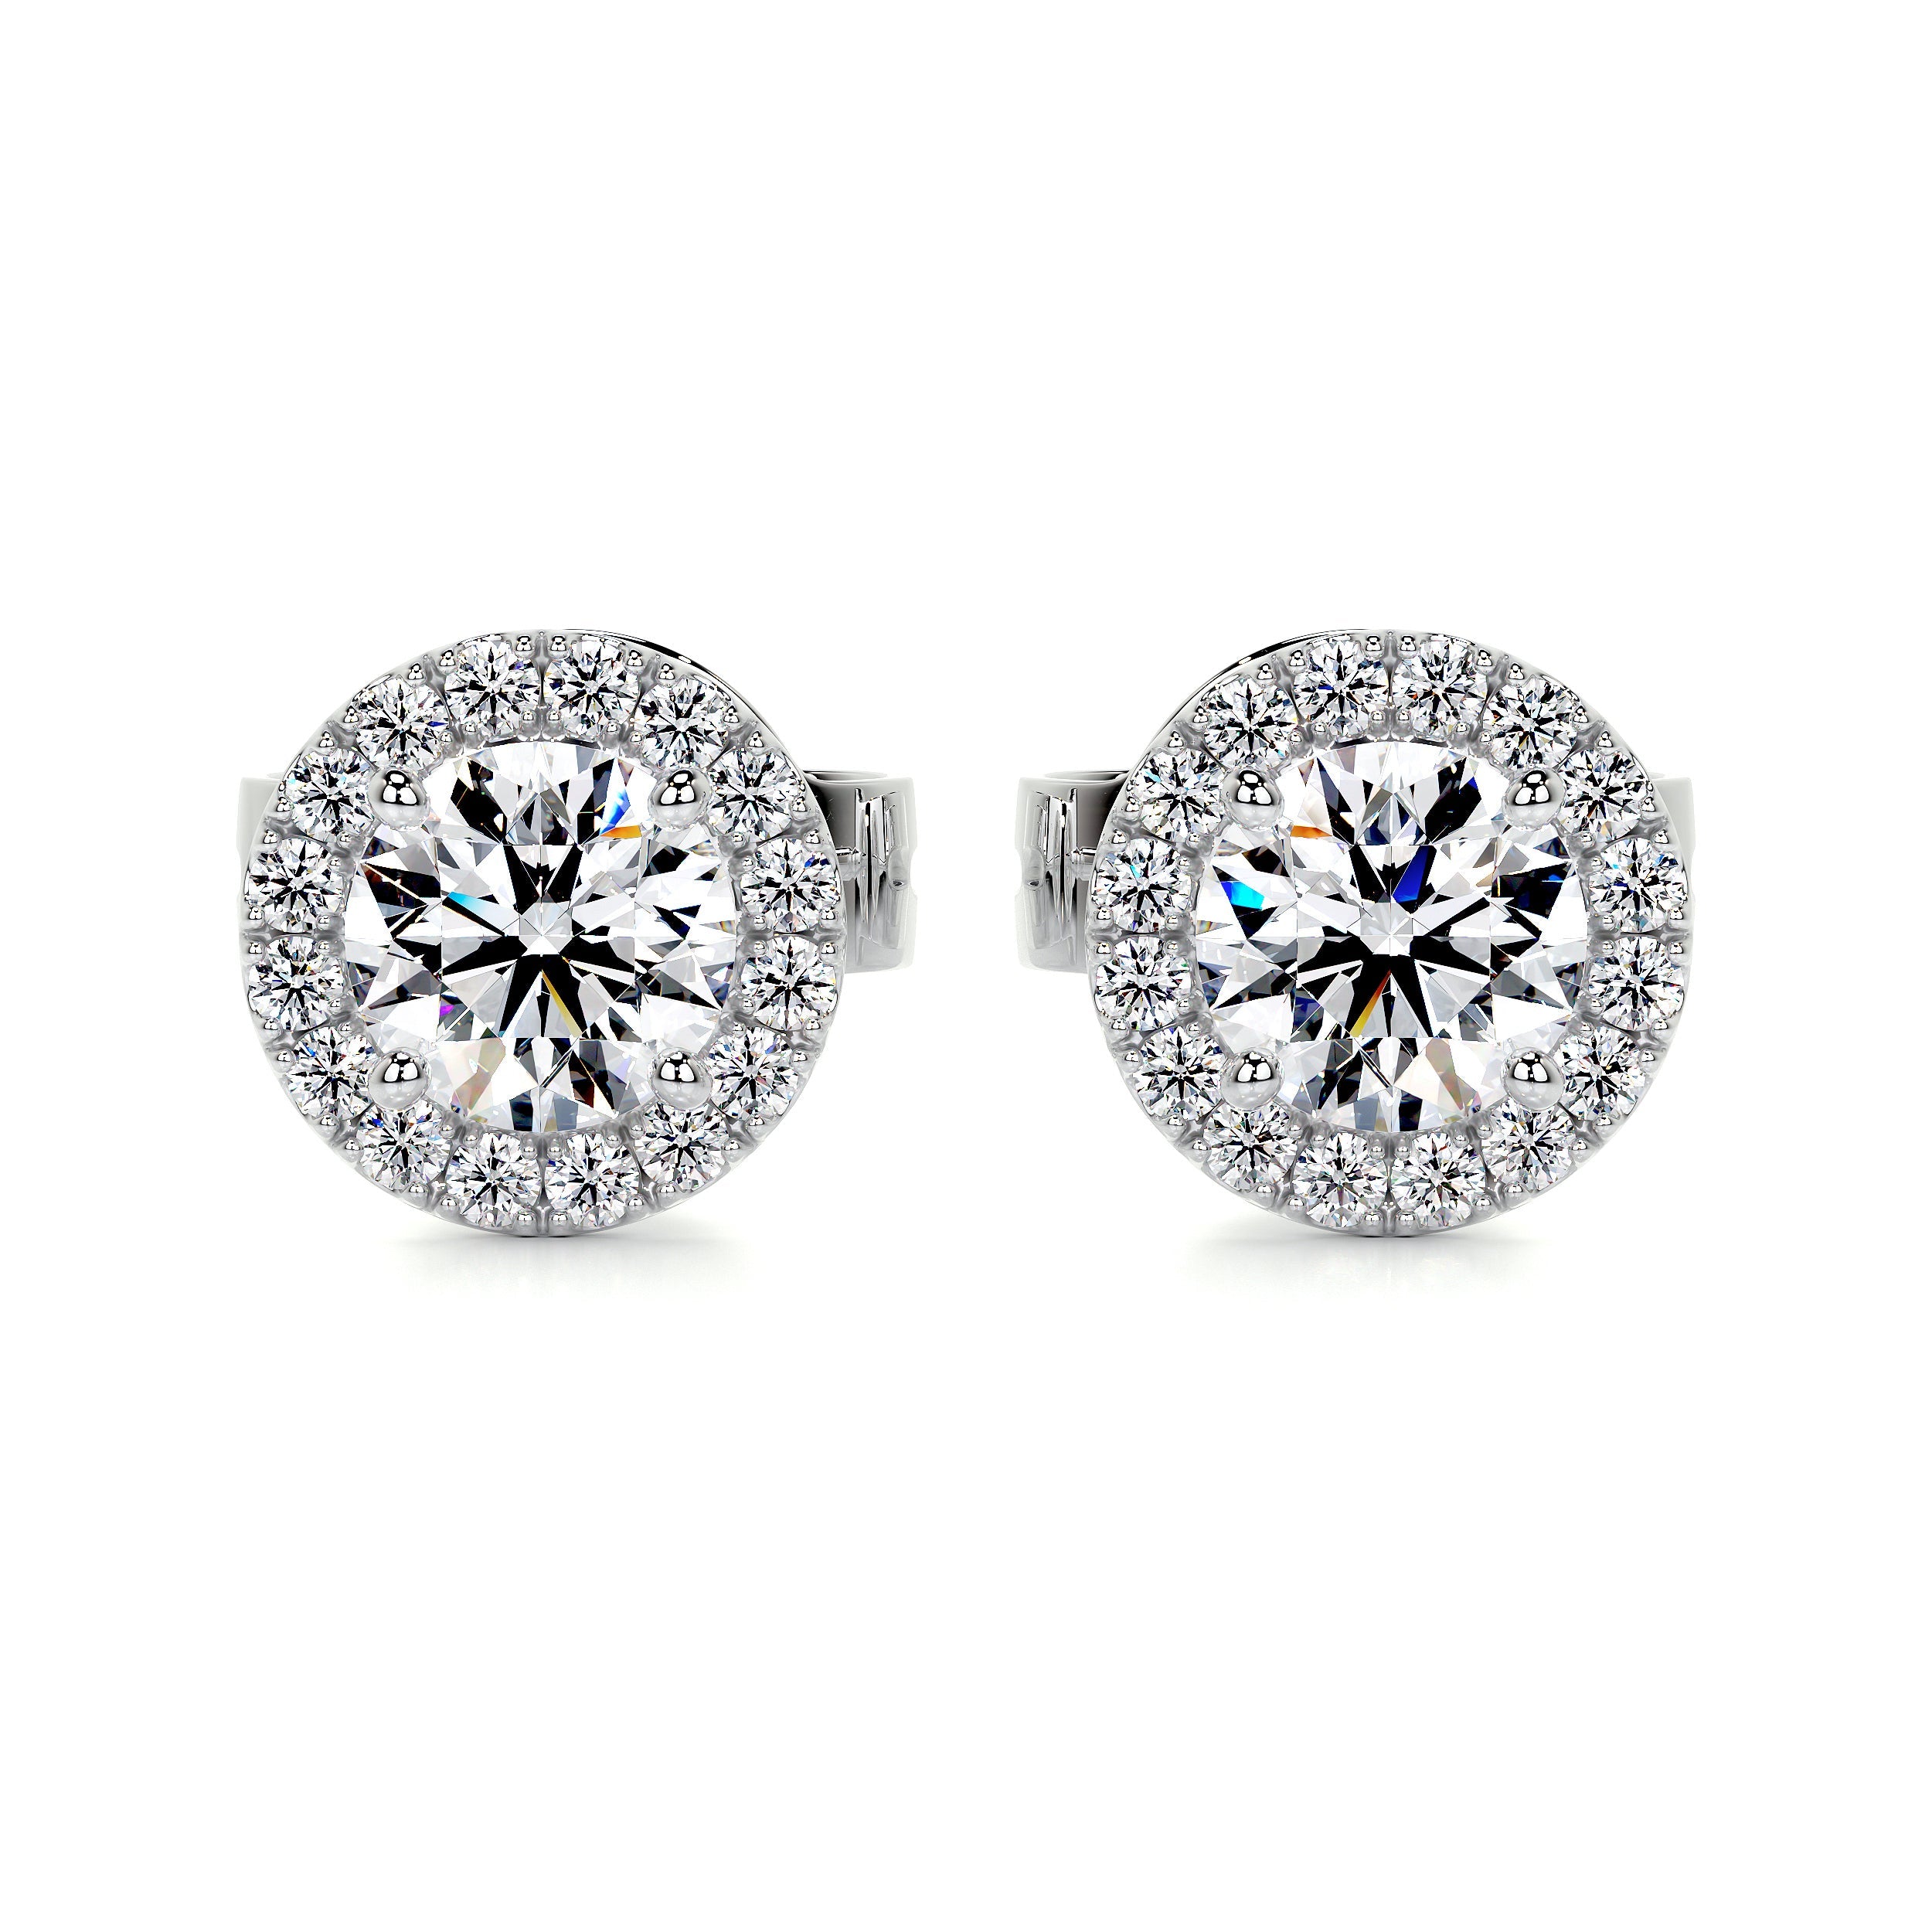 Beladora Diamond Stud Earrings, 2.24 total carats, E #511061